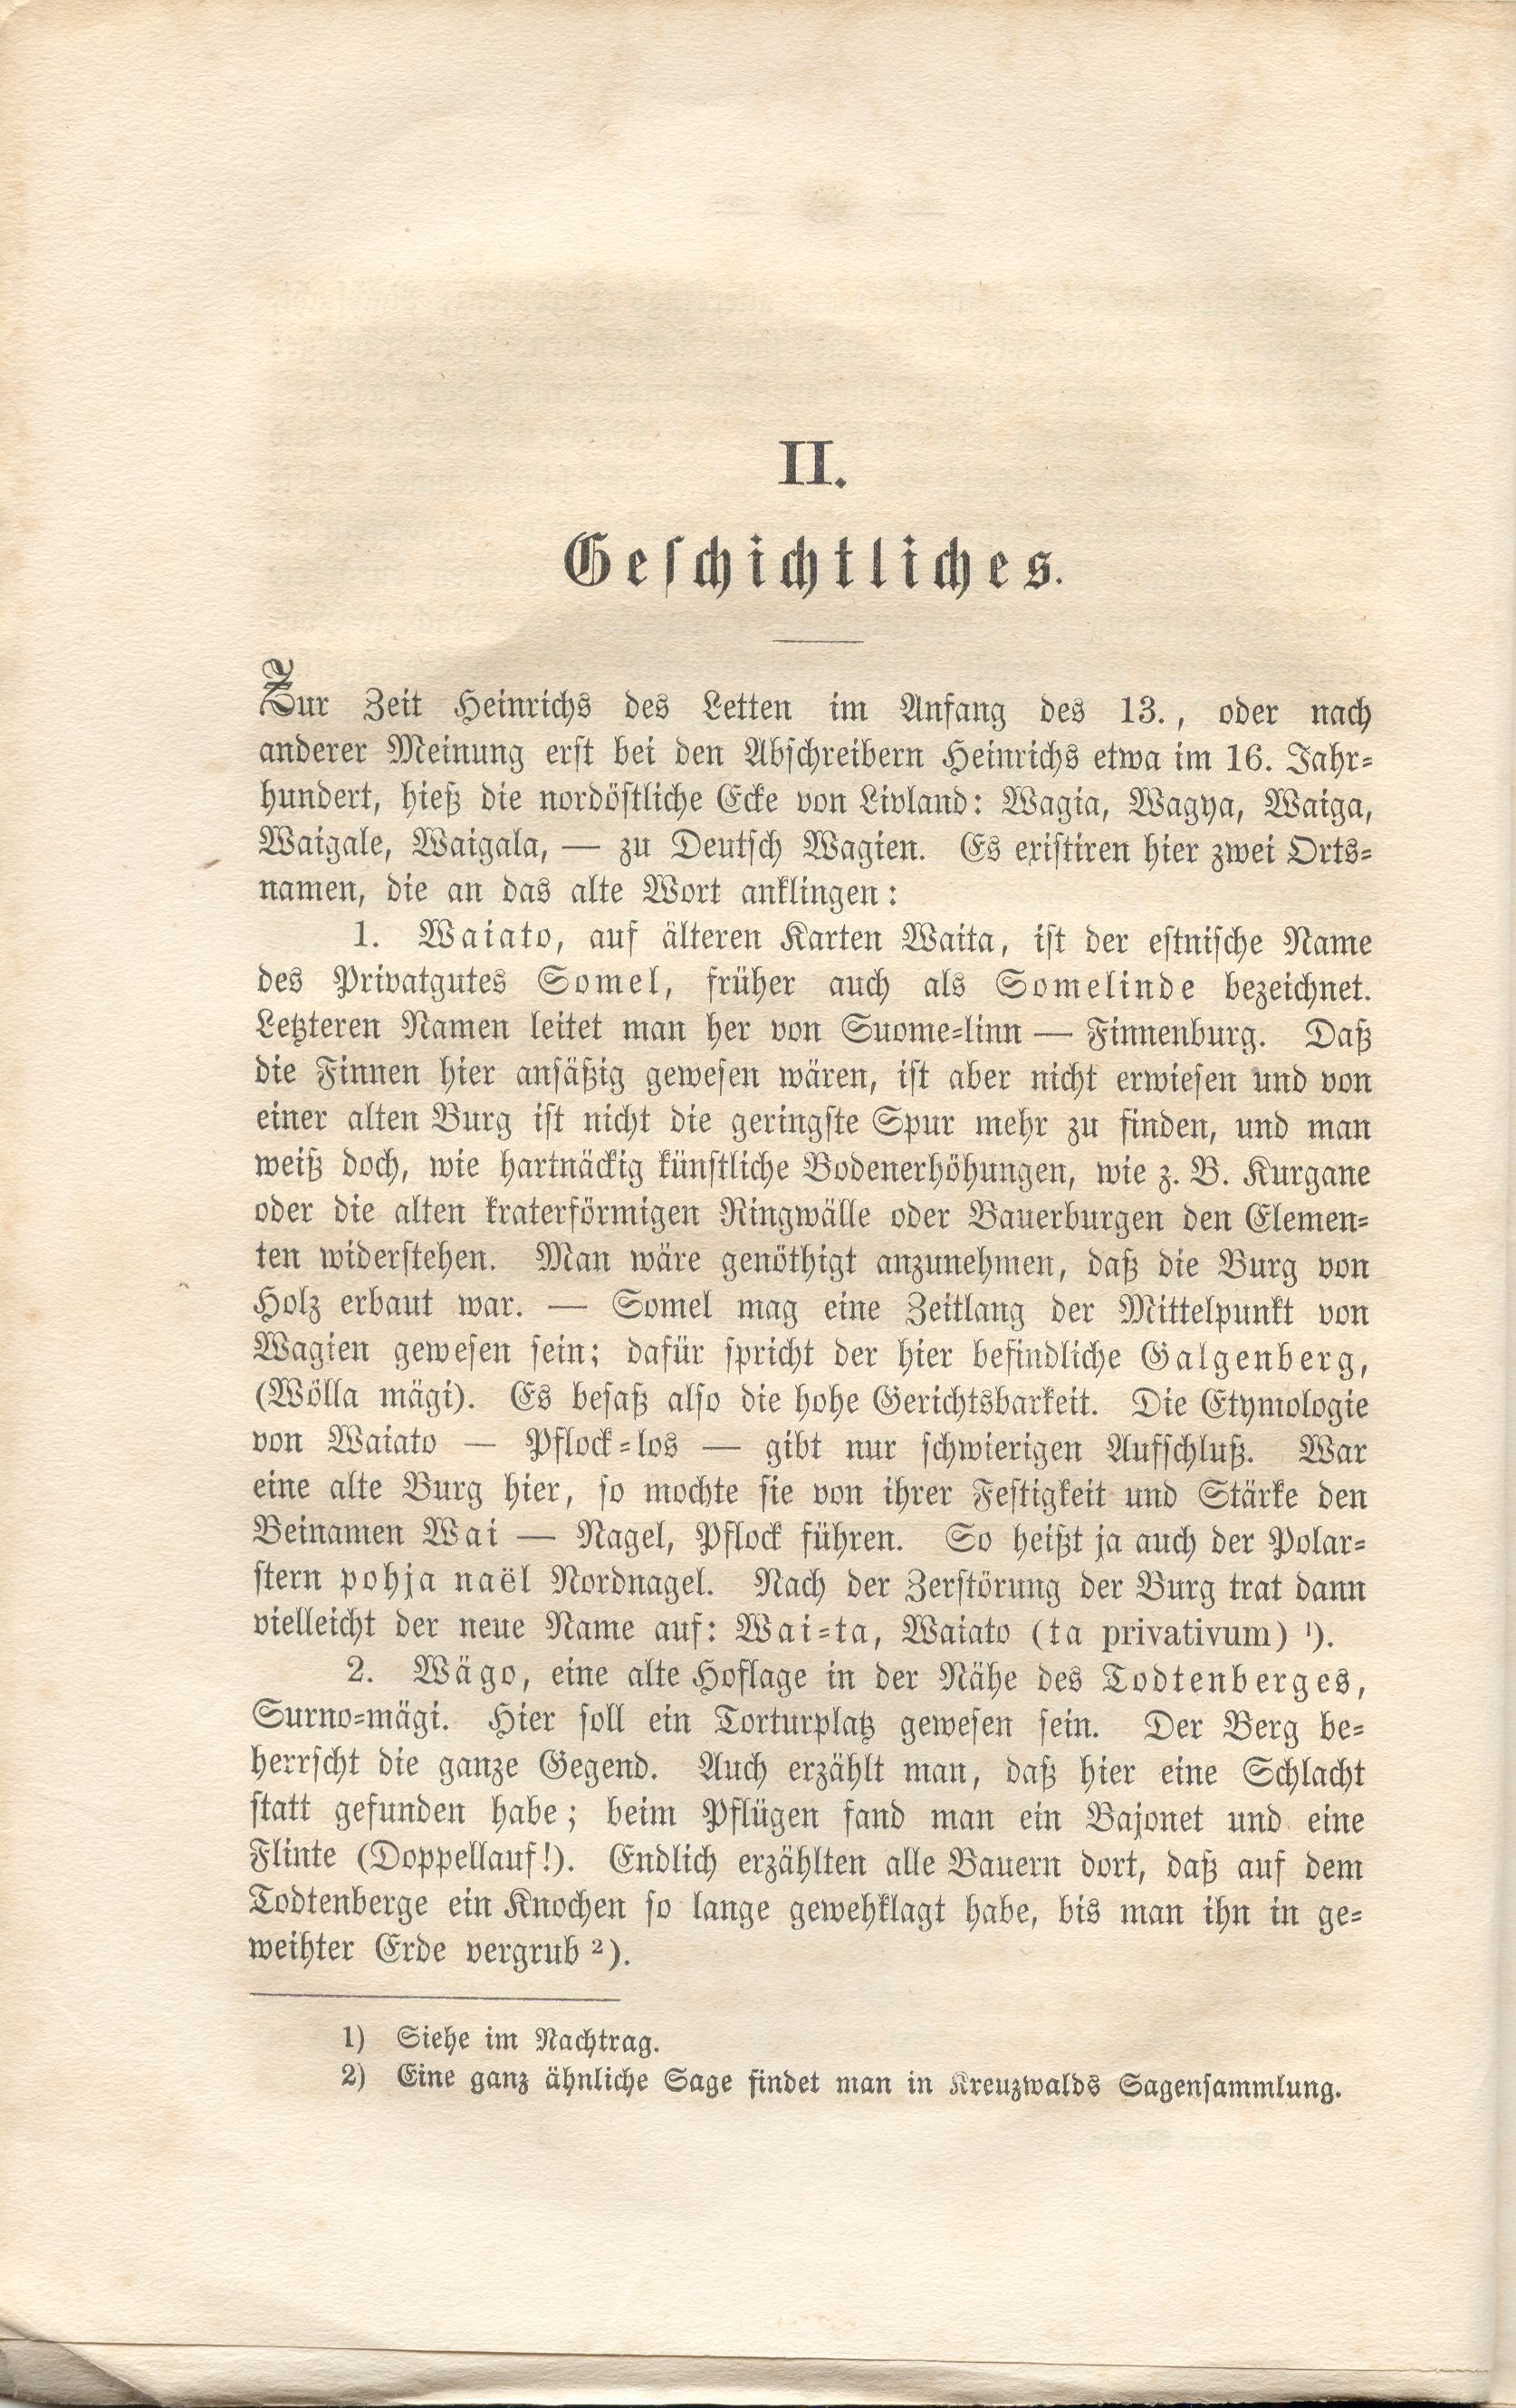 Wagien (1868) | 38. (34) Основной текст